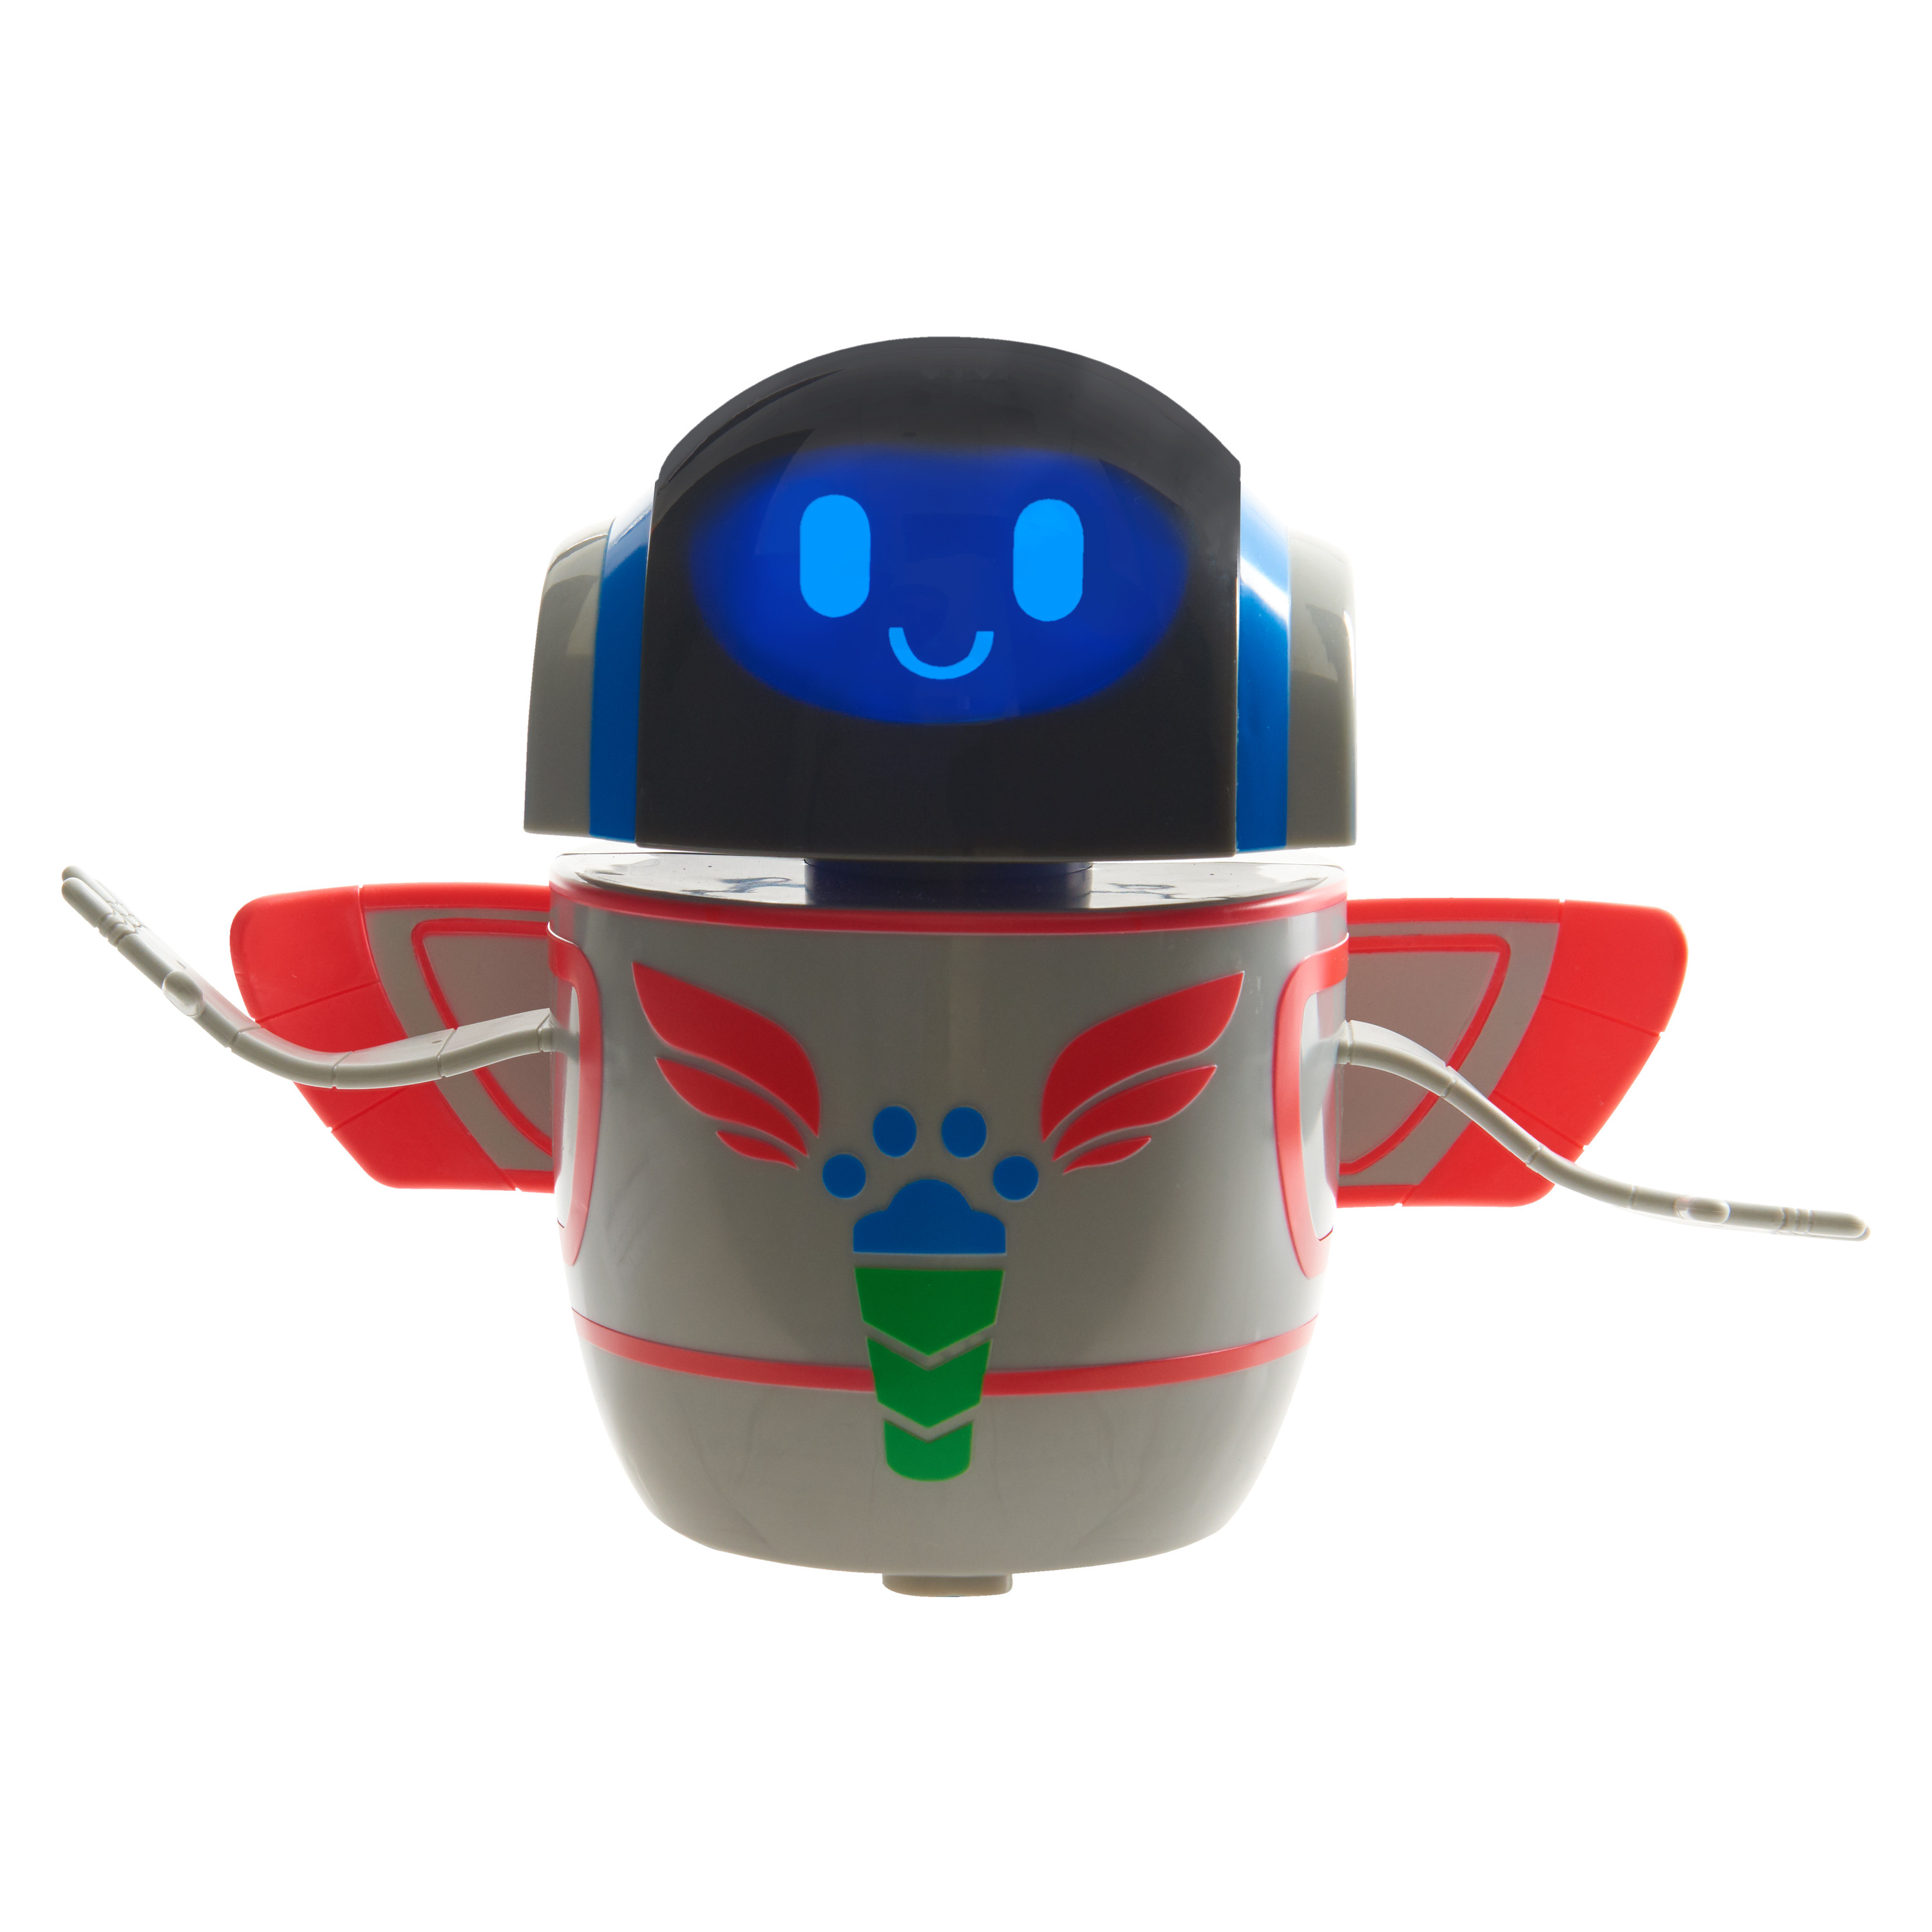 PJ Masks Lights & Sounds PJ Robot,  Kids Toys for Ages 3 Up, Gifts and Presents - image 2 of 2